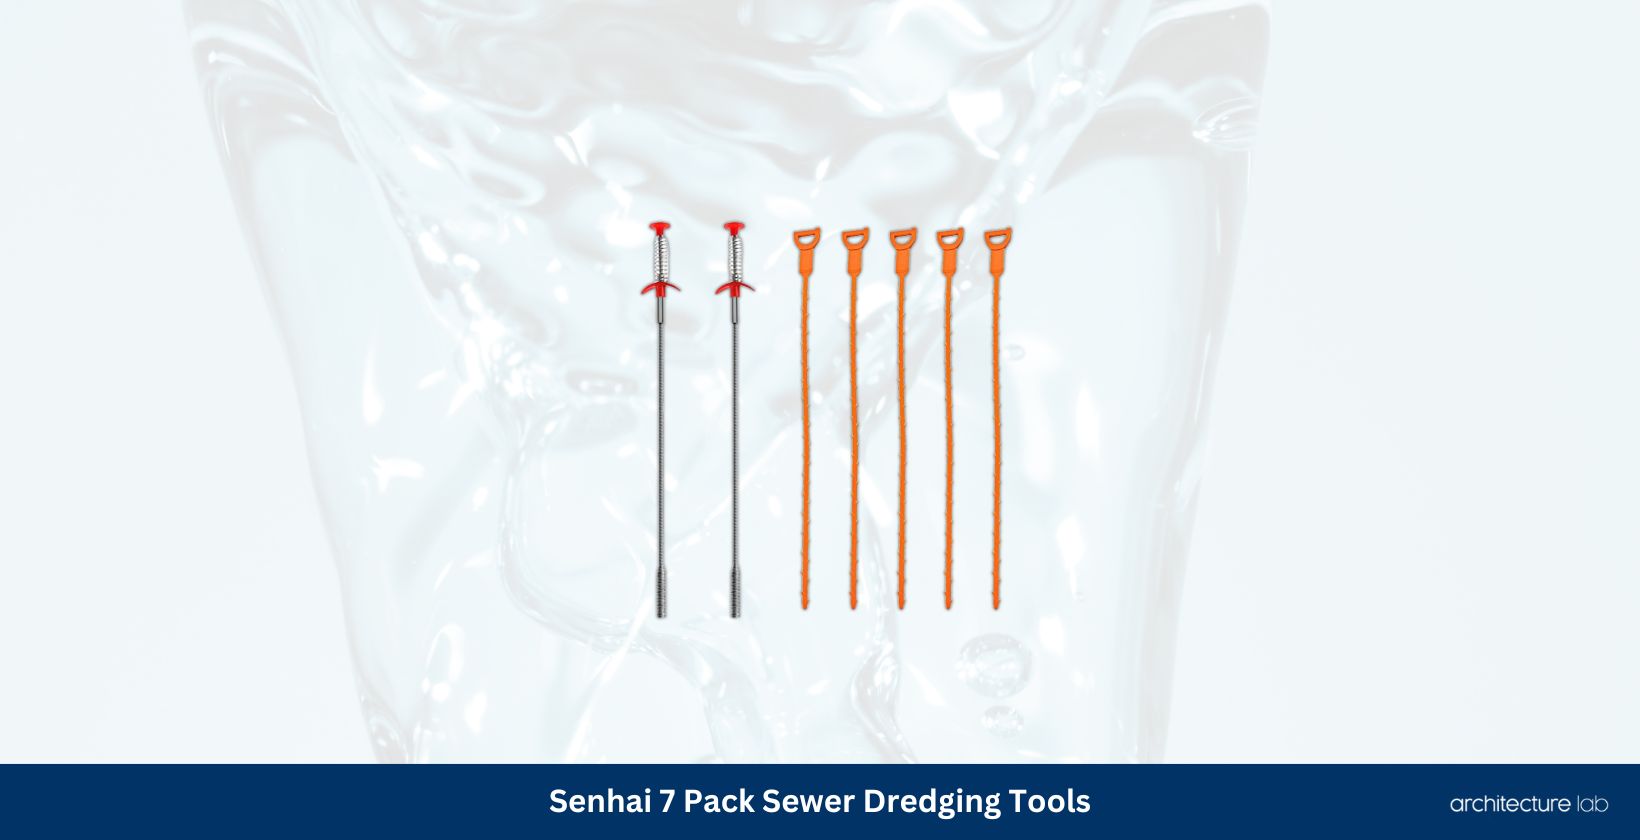 Senhai 7 pack sewer dredging tools